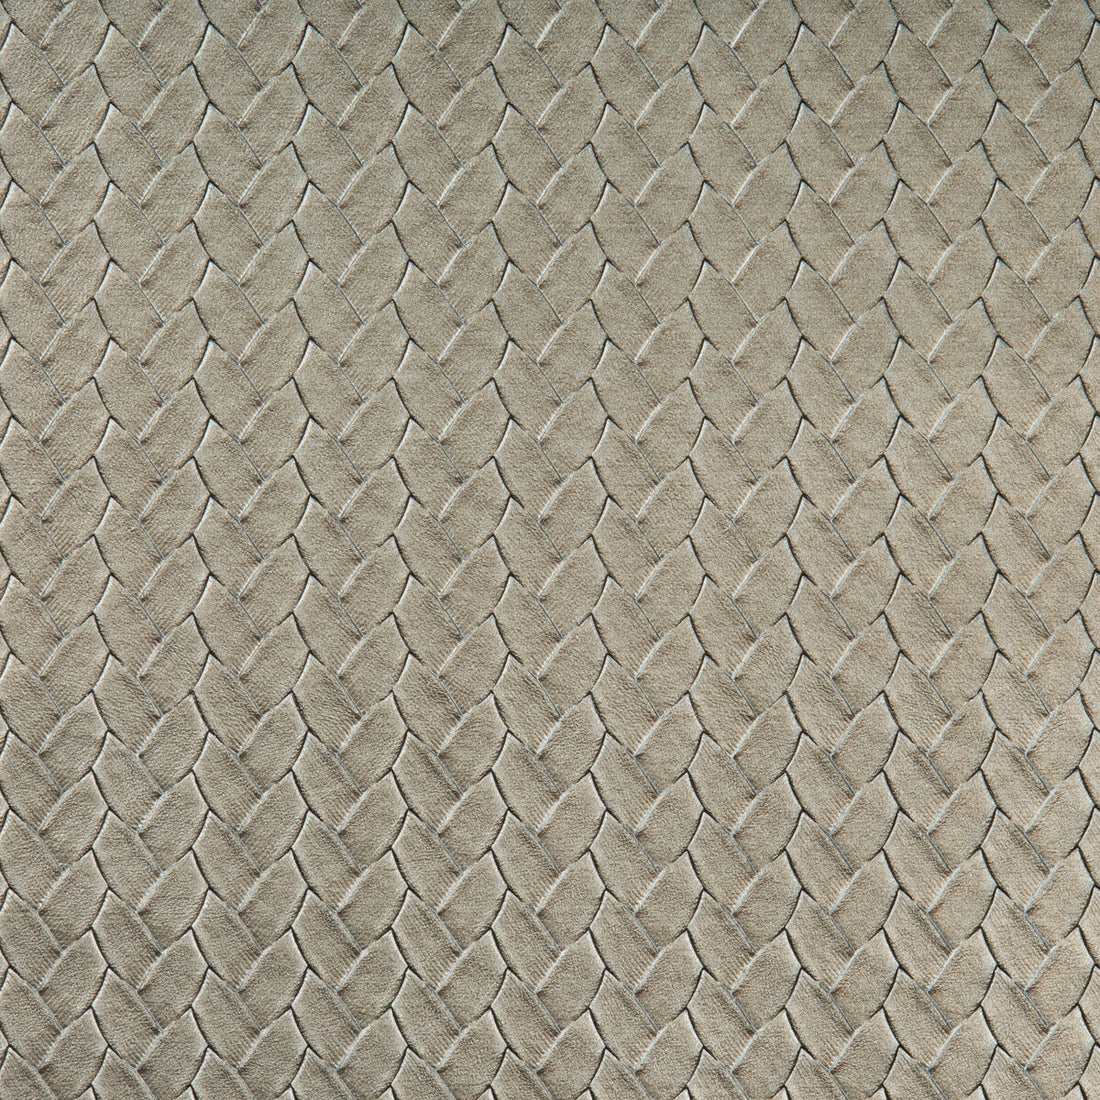 Kravet Design fabric in verlaine-21 color - pattern VERLAINE.21.0 - by Kravet Design